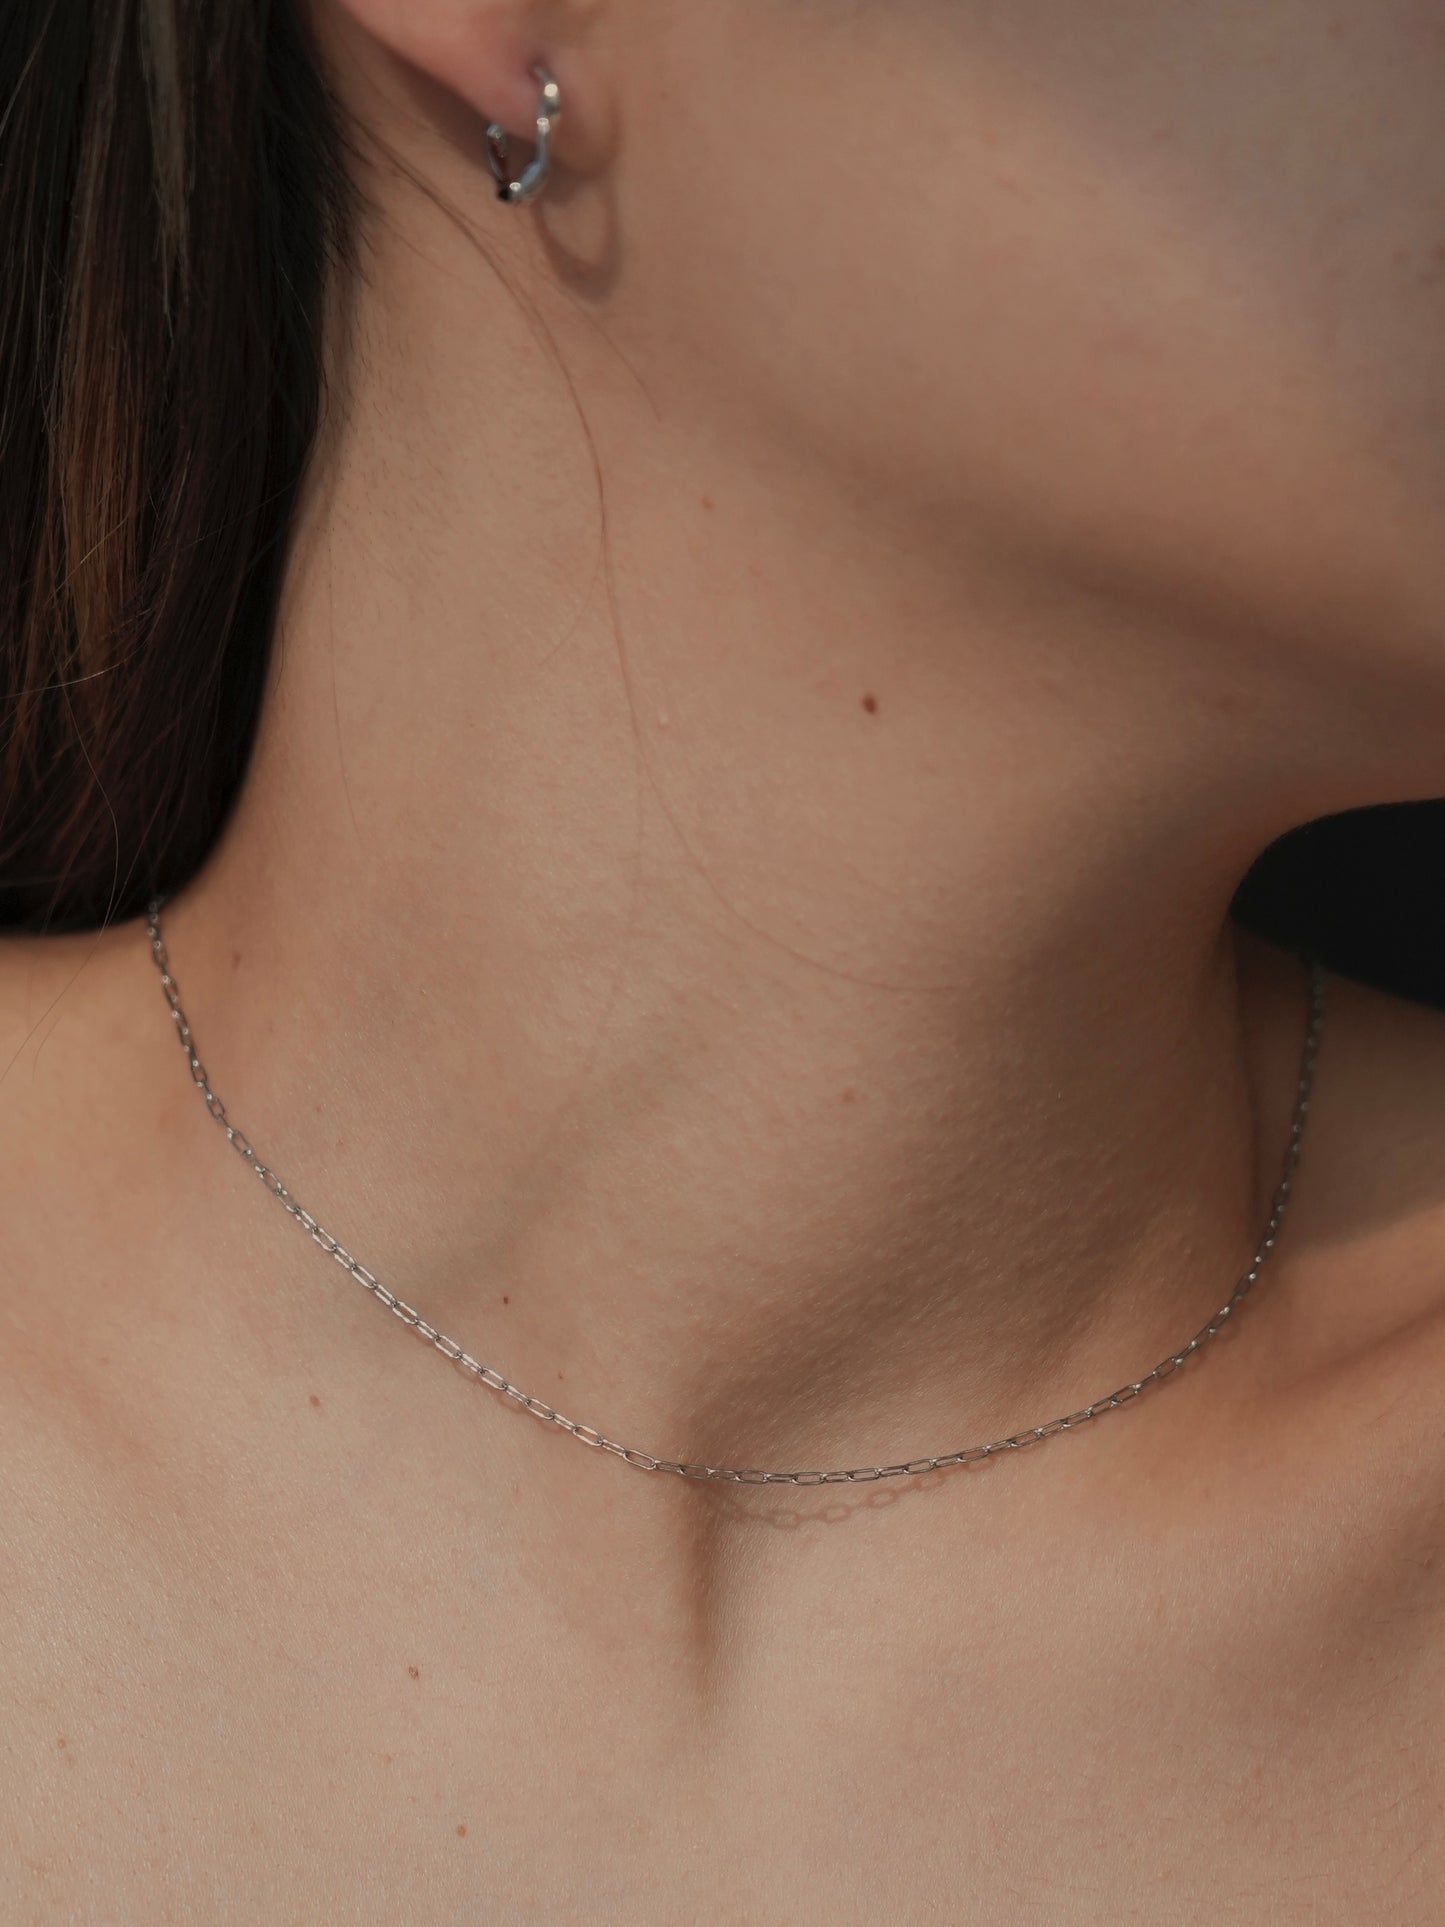 pas chain necklace / (金属アレルギー対応)